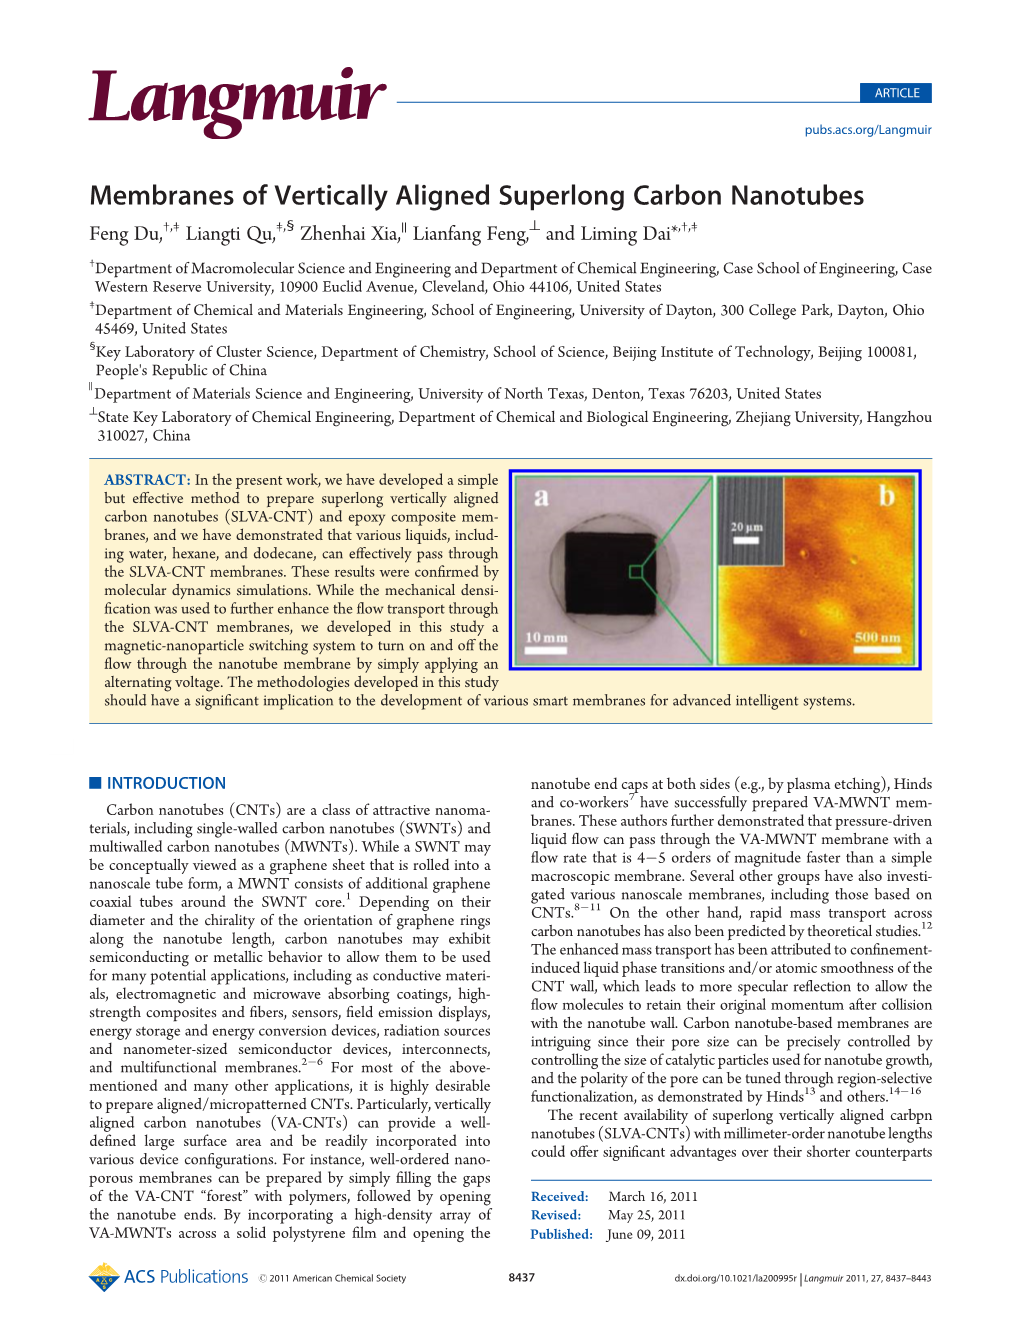 Membranes of Vertically Aligned Superlong Carbon Nanotubes